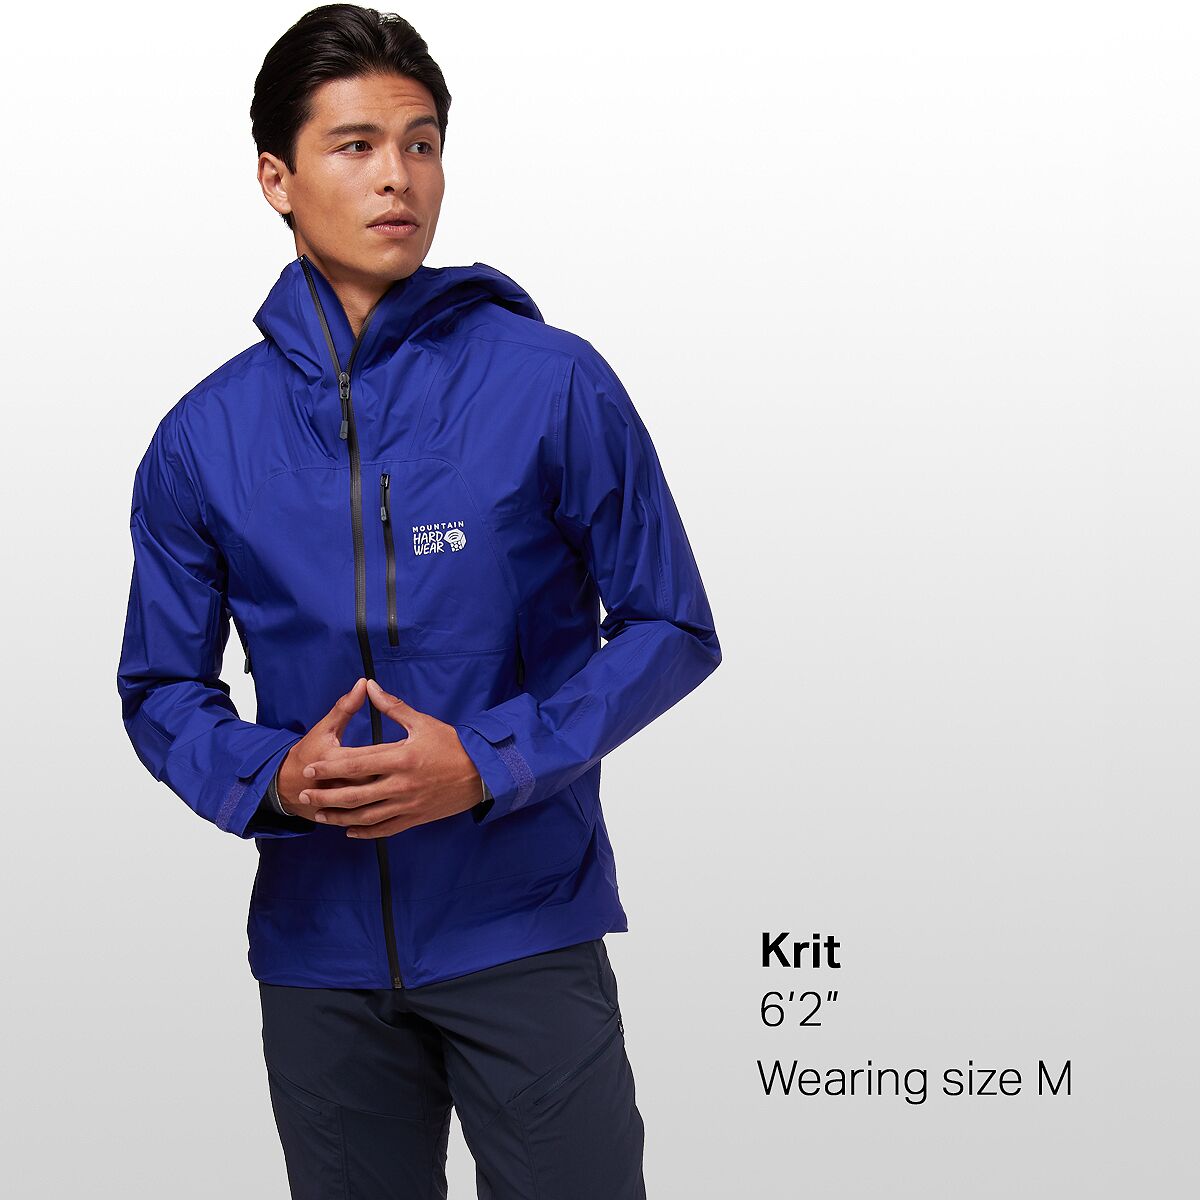 Mountain Hardwear Men's Minimizer GORE-TEX Paclite Plus Jacket